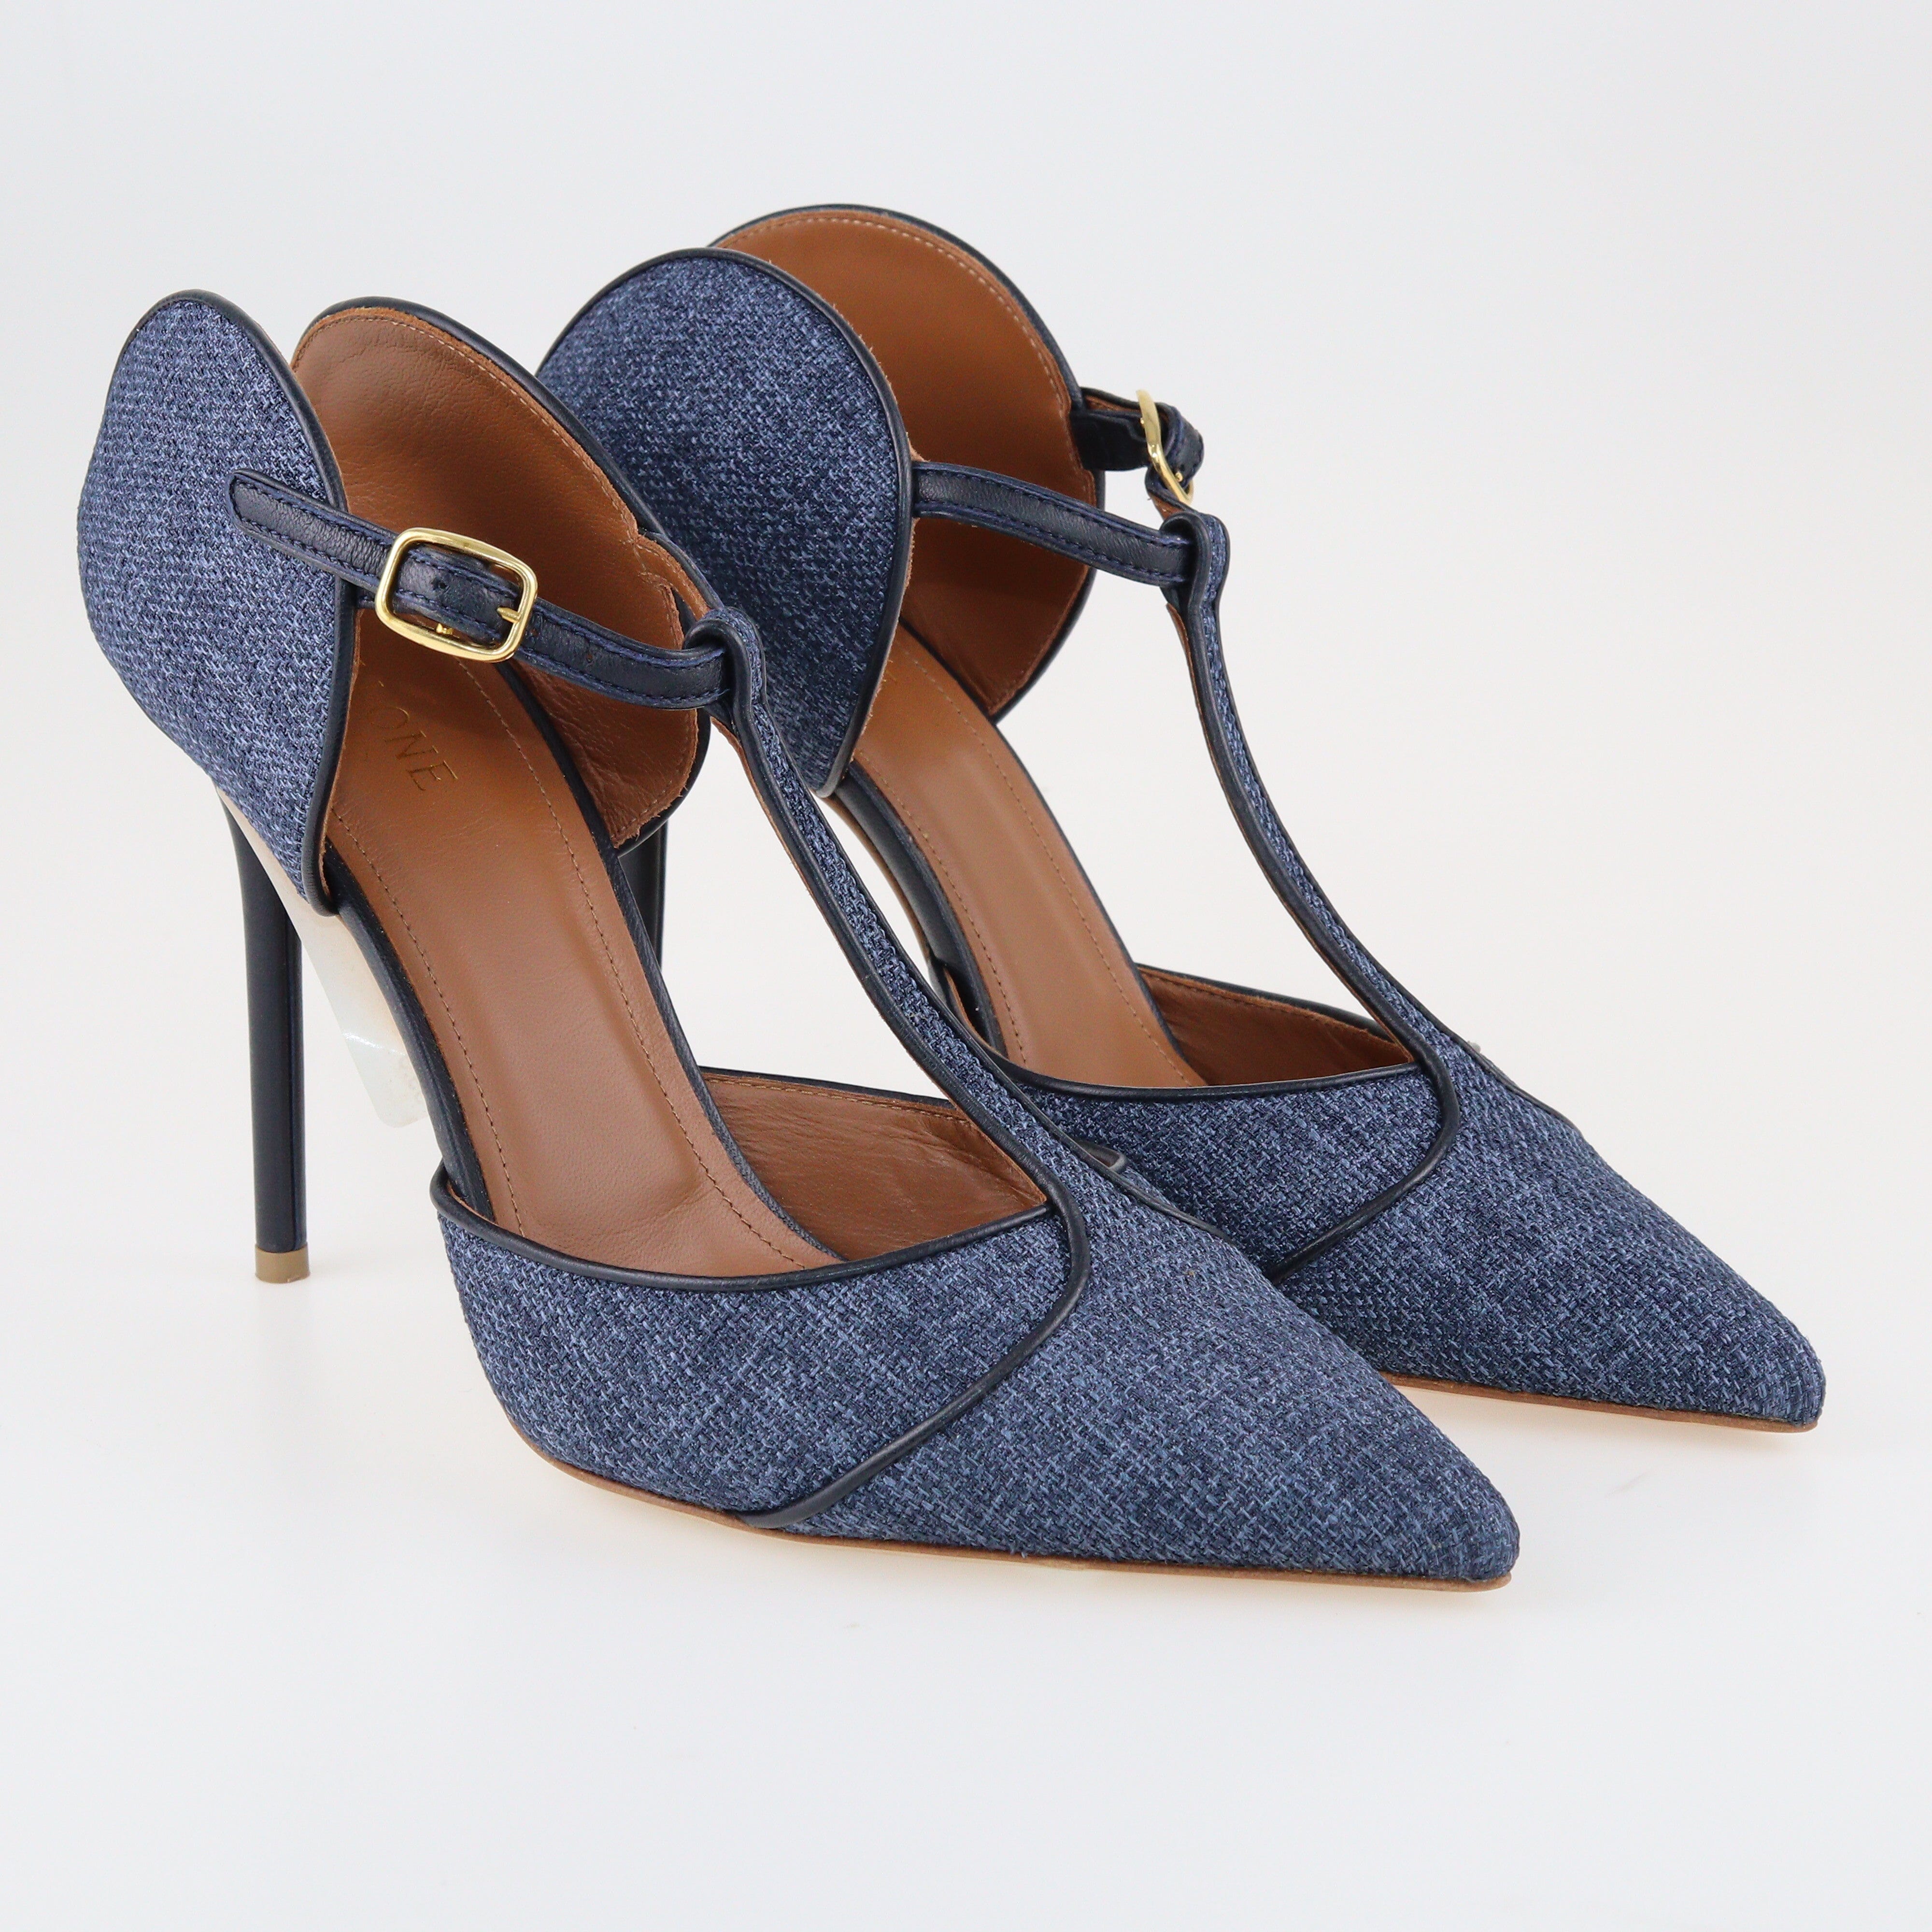 Blue Imogen Pumps Shoes Malone Souliers 